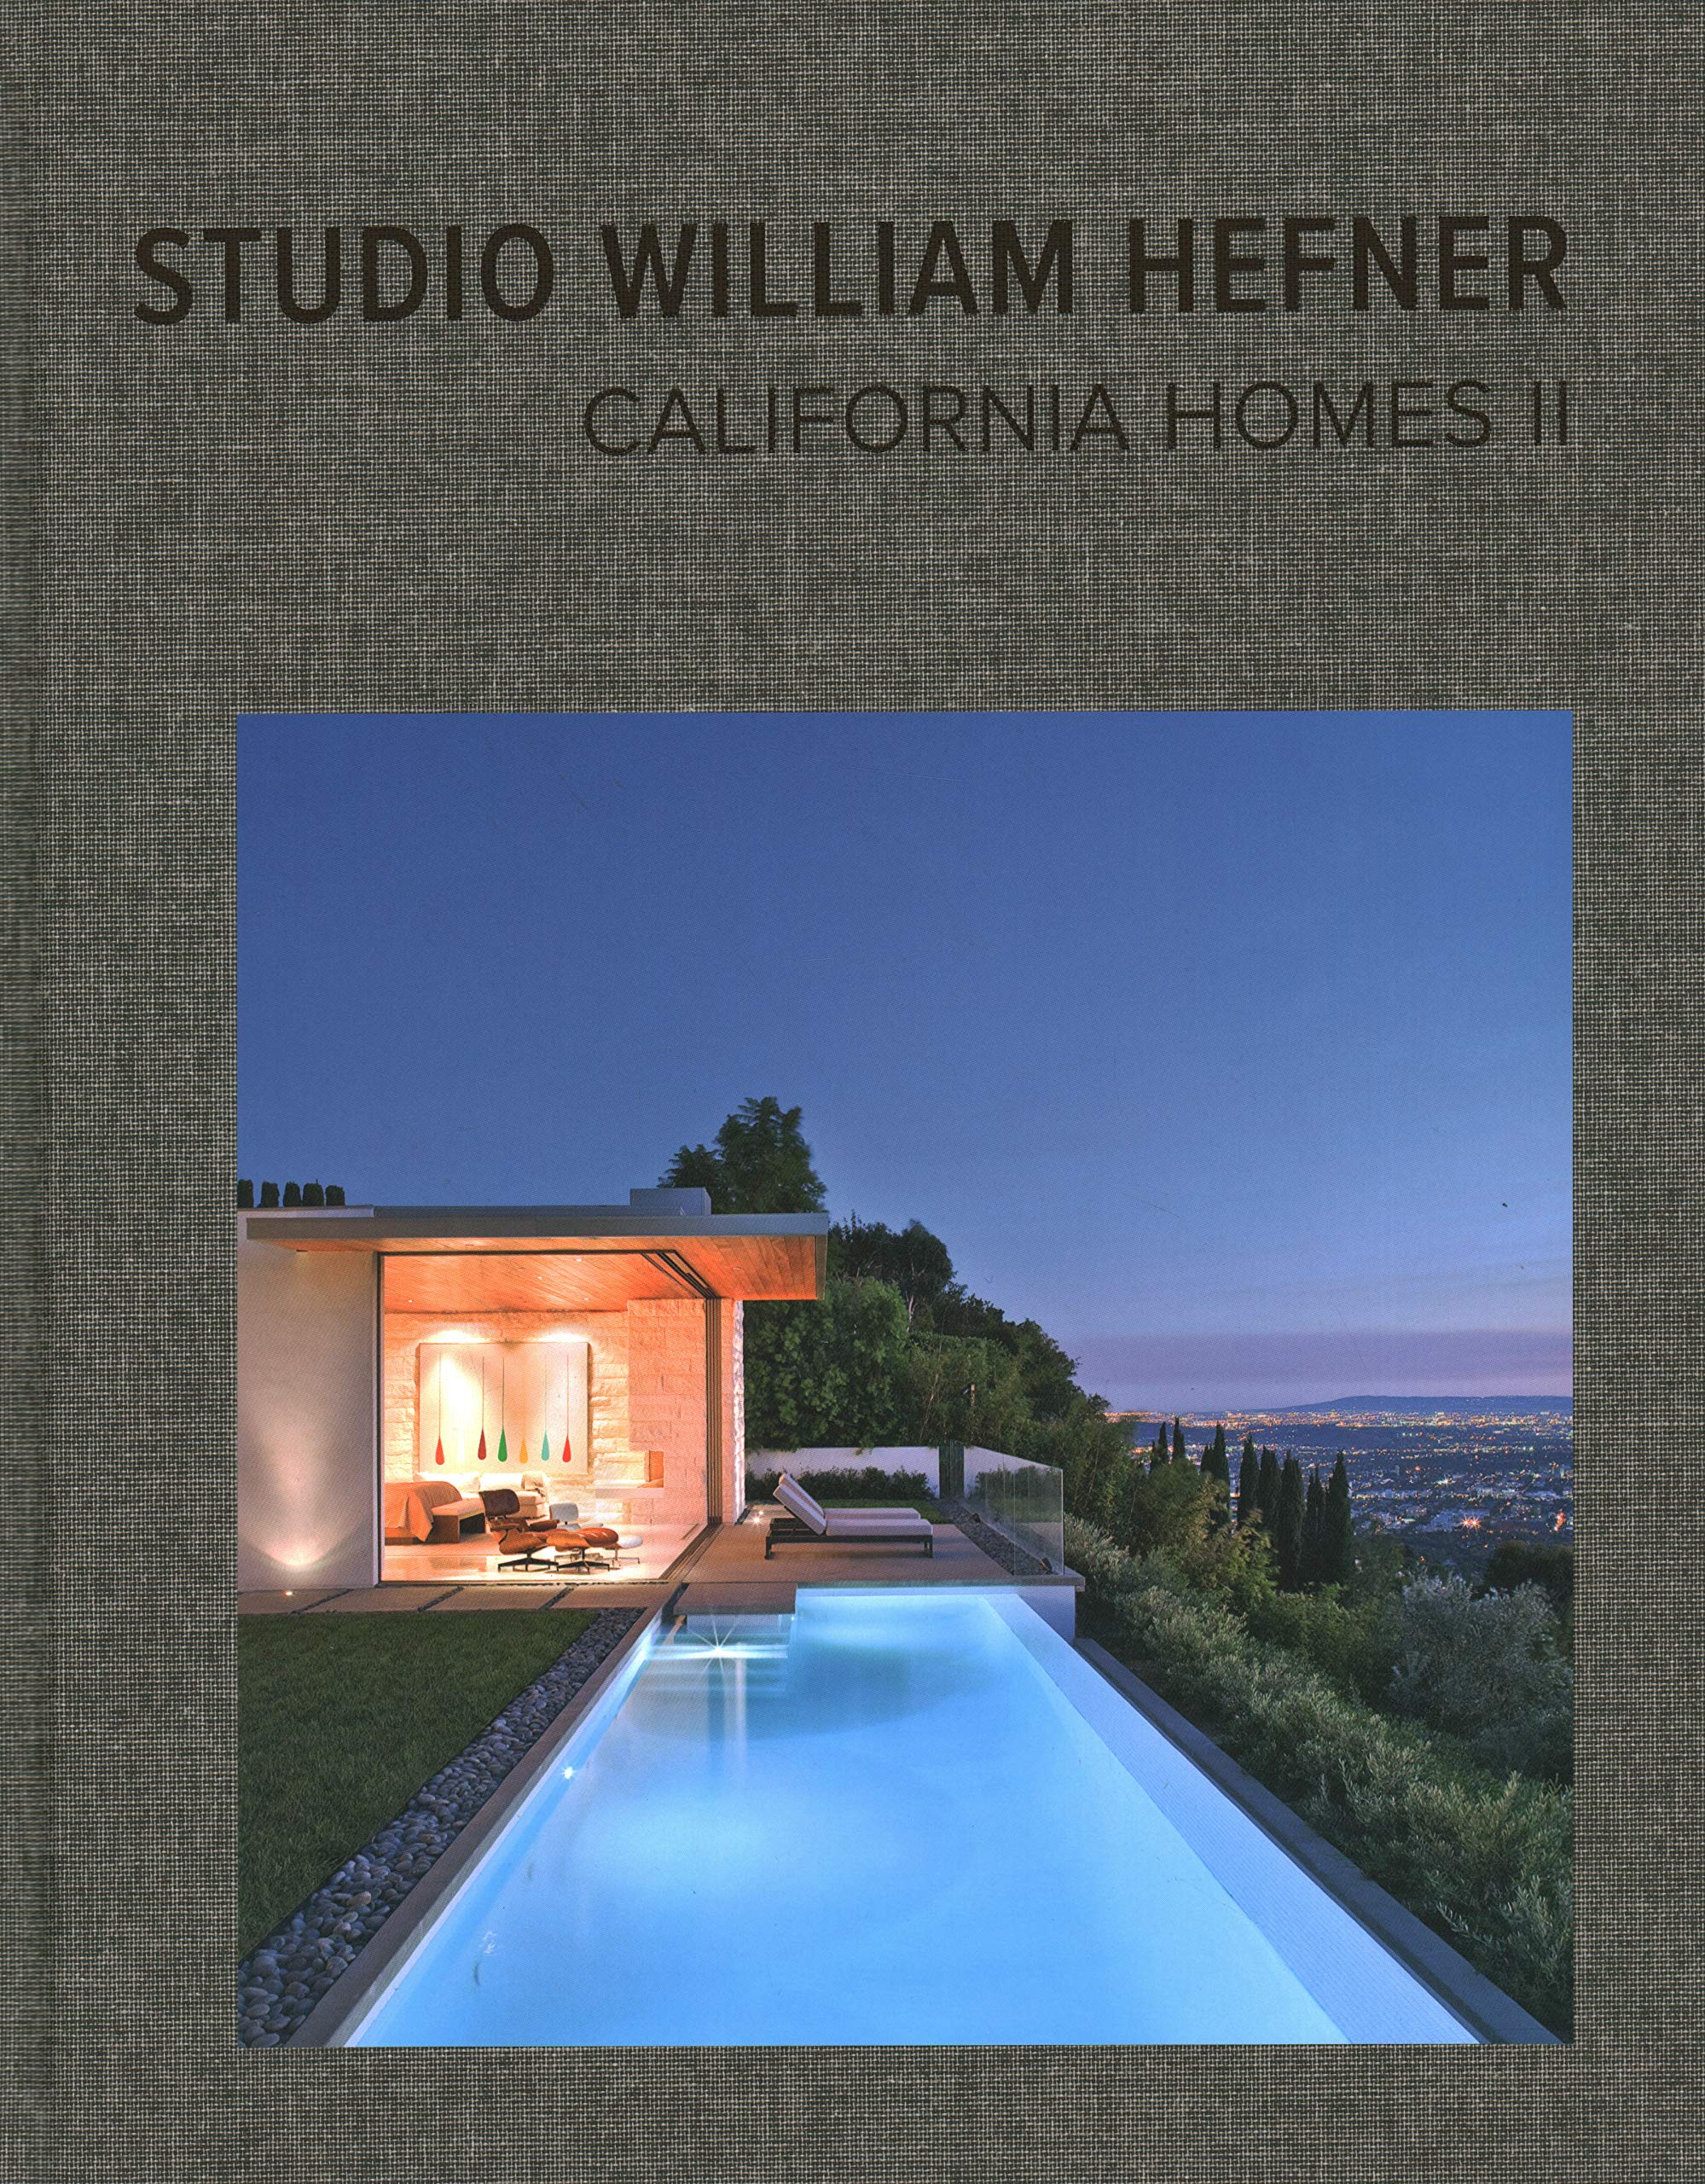 Studio William Hefner: California Homes II